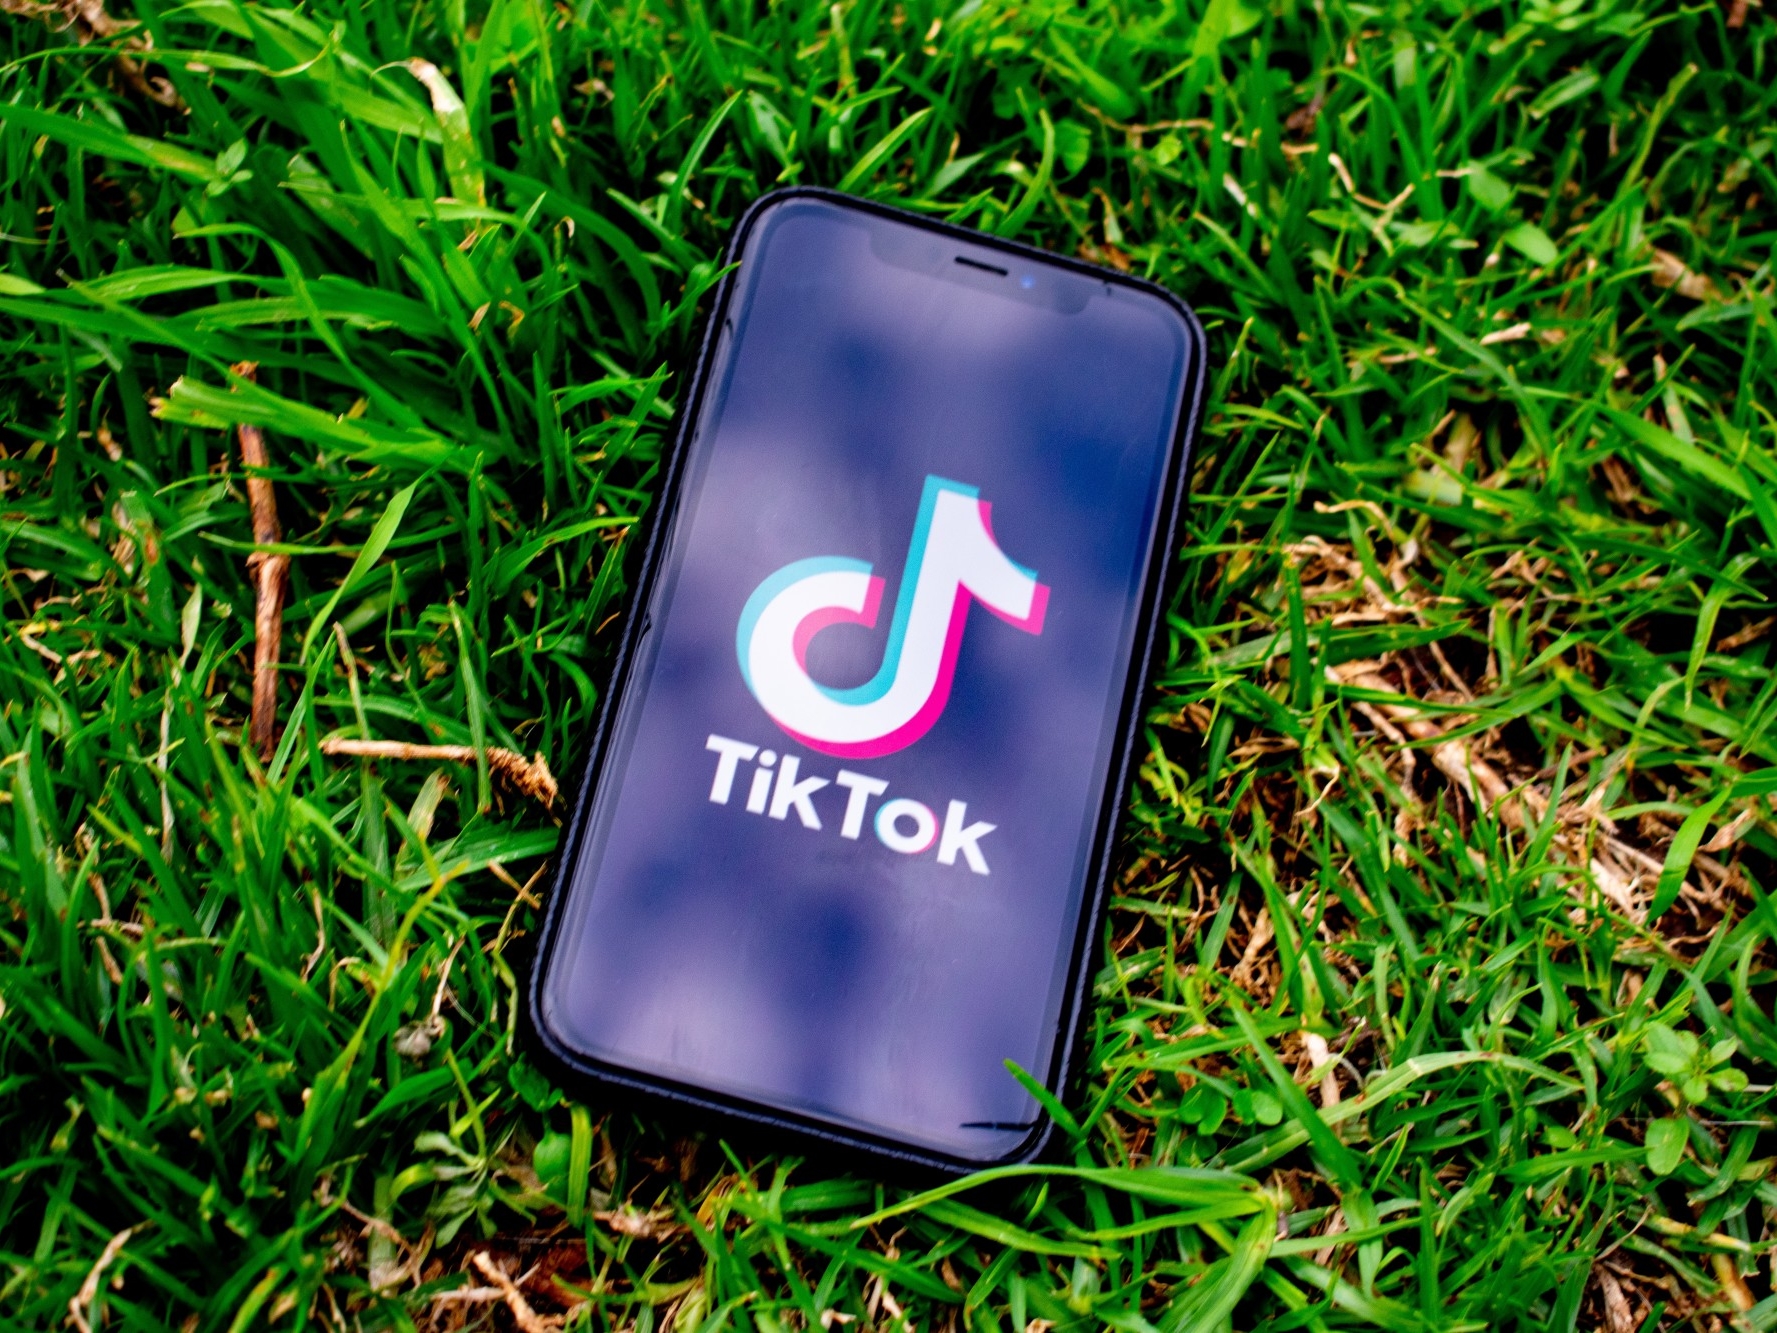 phone in grass with TikTok app open